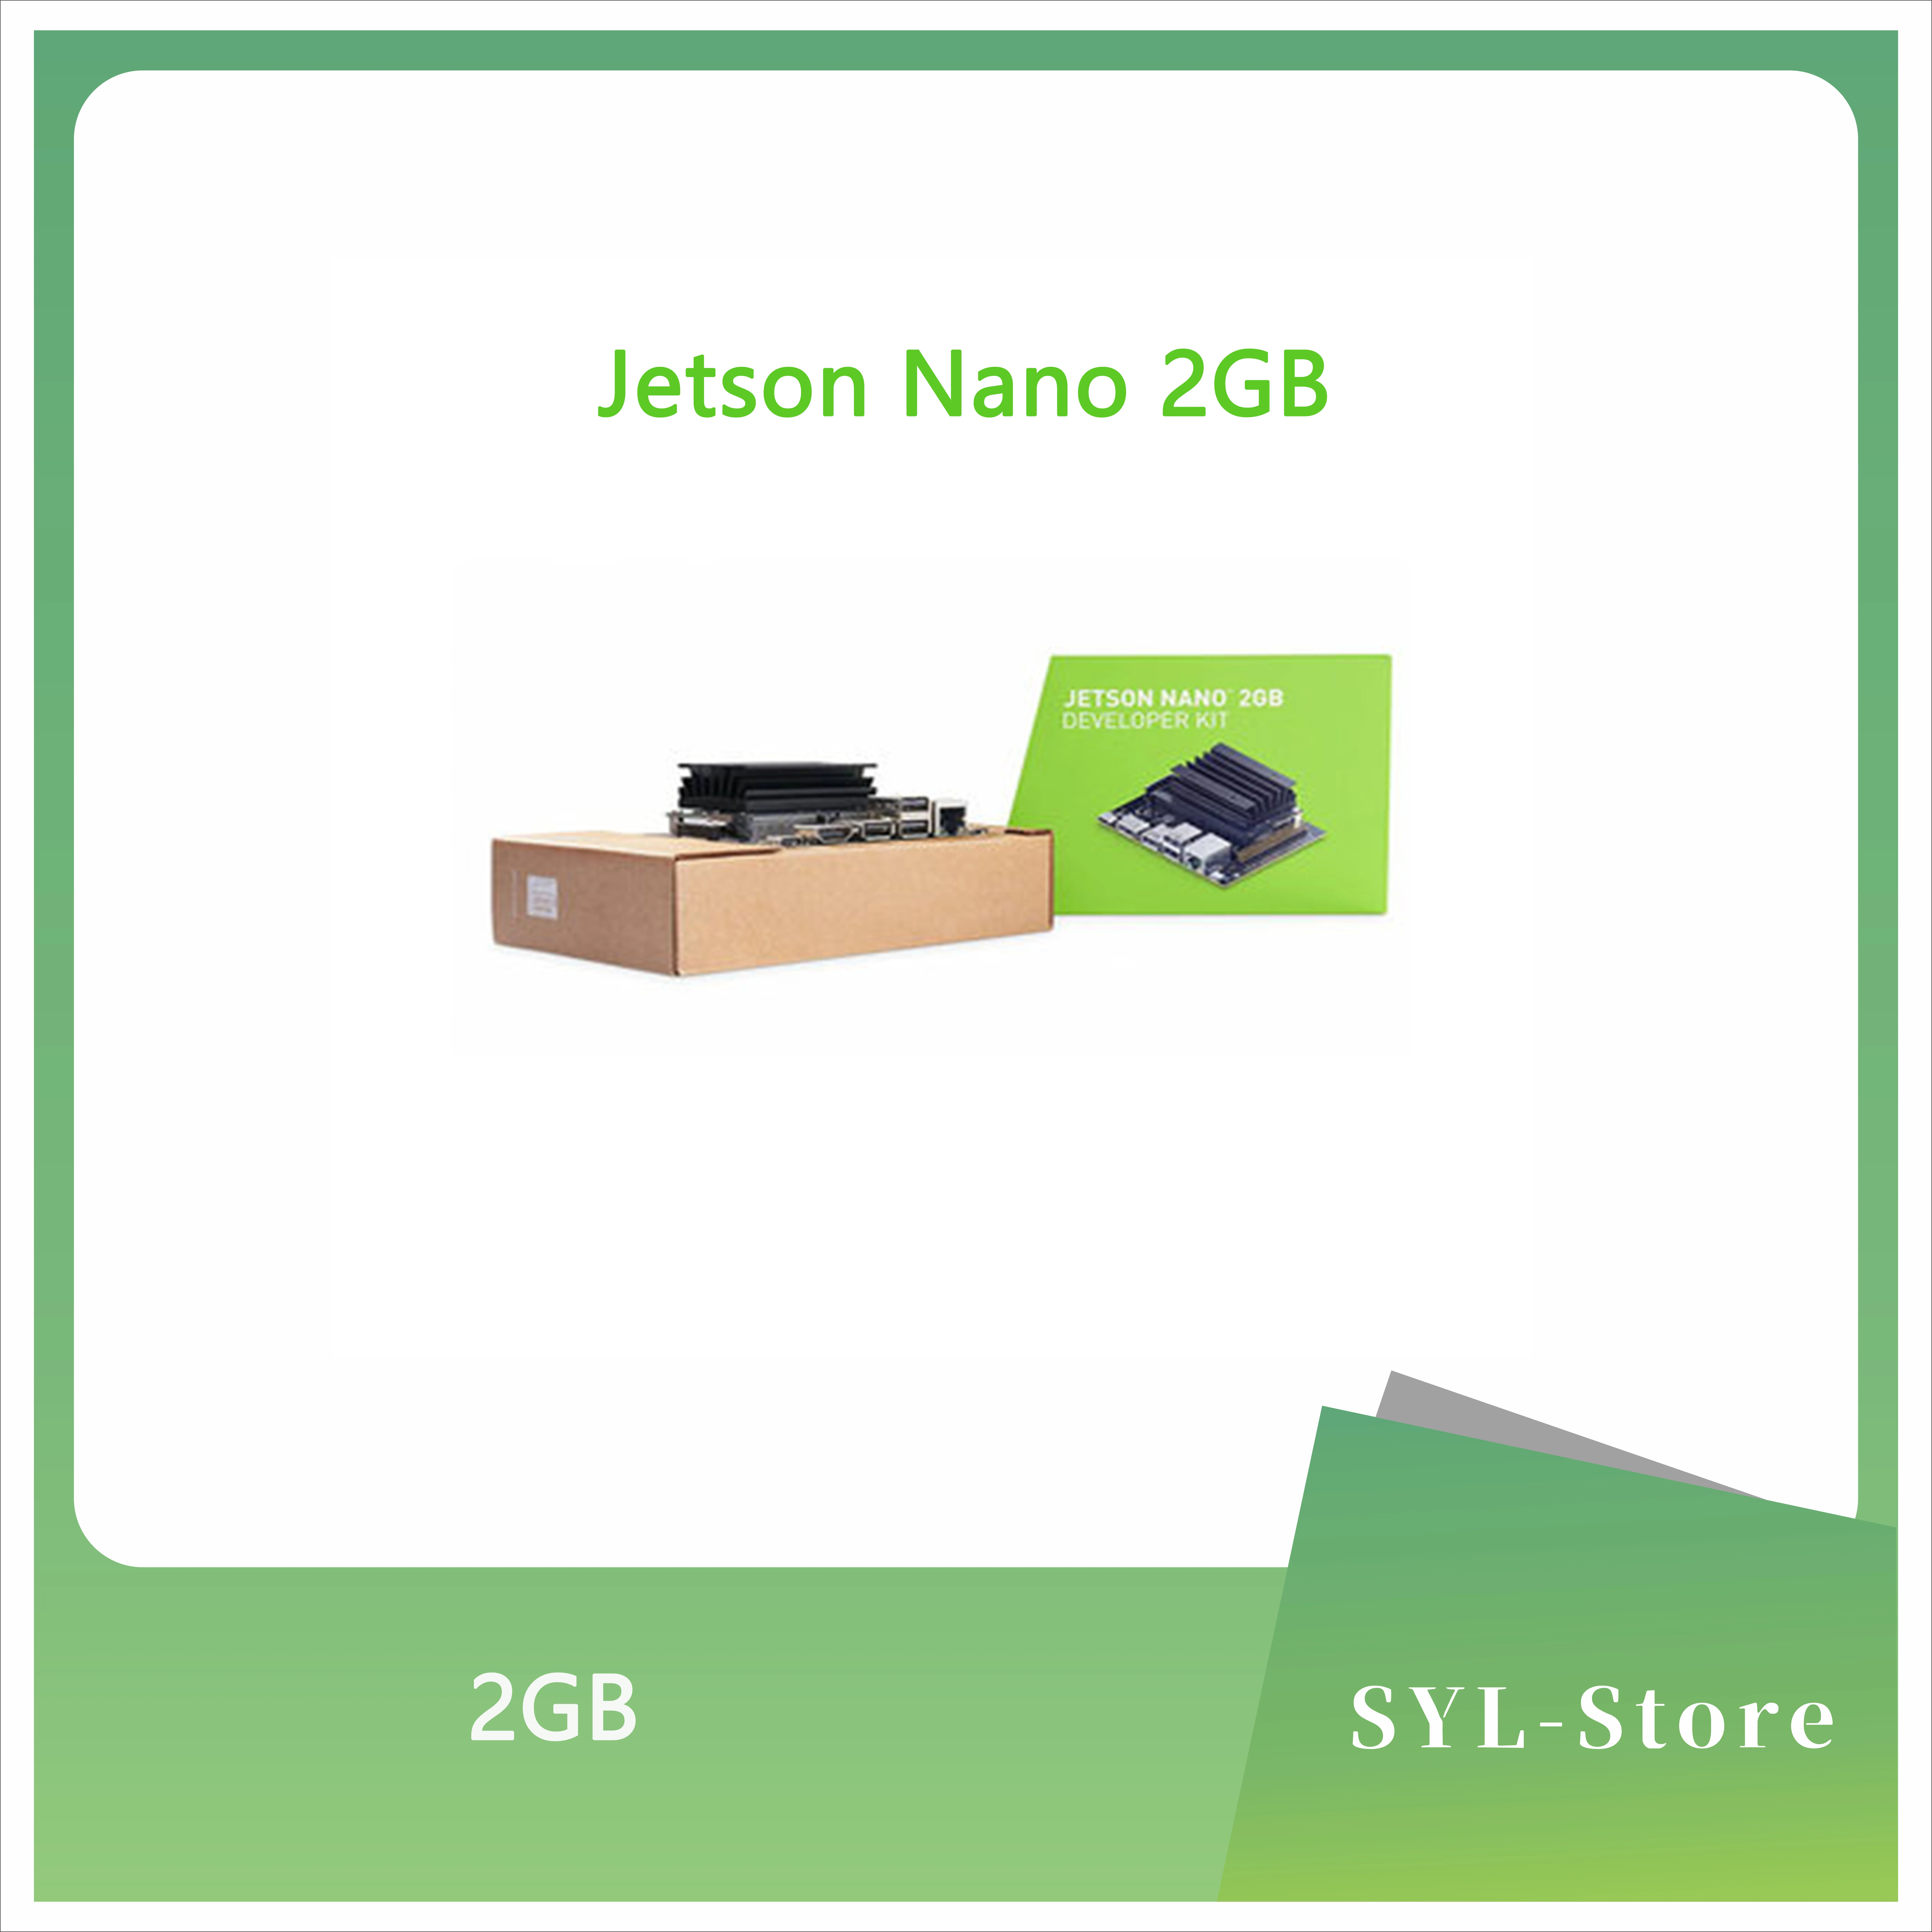 

Nvidia Jetson Nano 2 Гб, набор разработчиков демо-платы, платформа Linux AI, обучающая макетная плата, мини-компьютер для Ии и робототехники